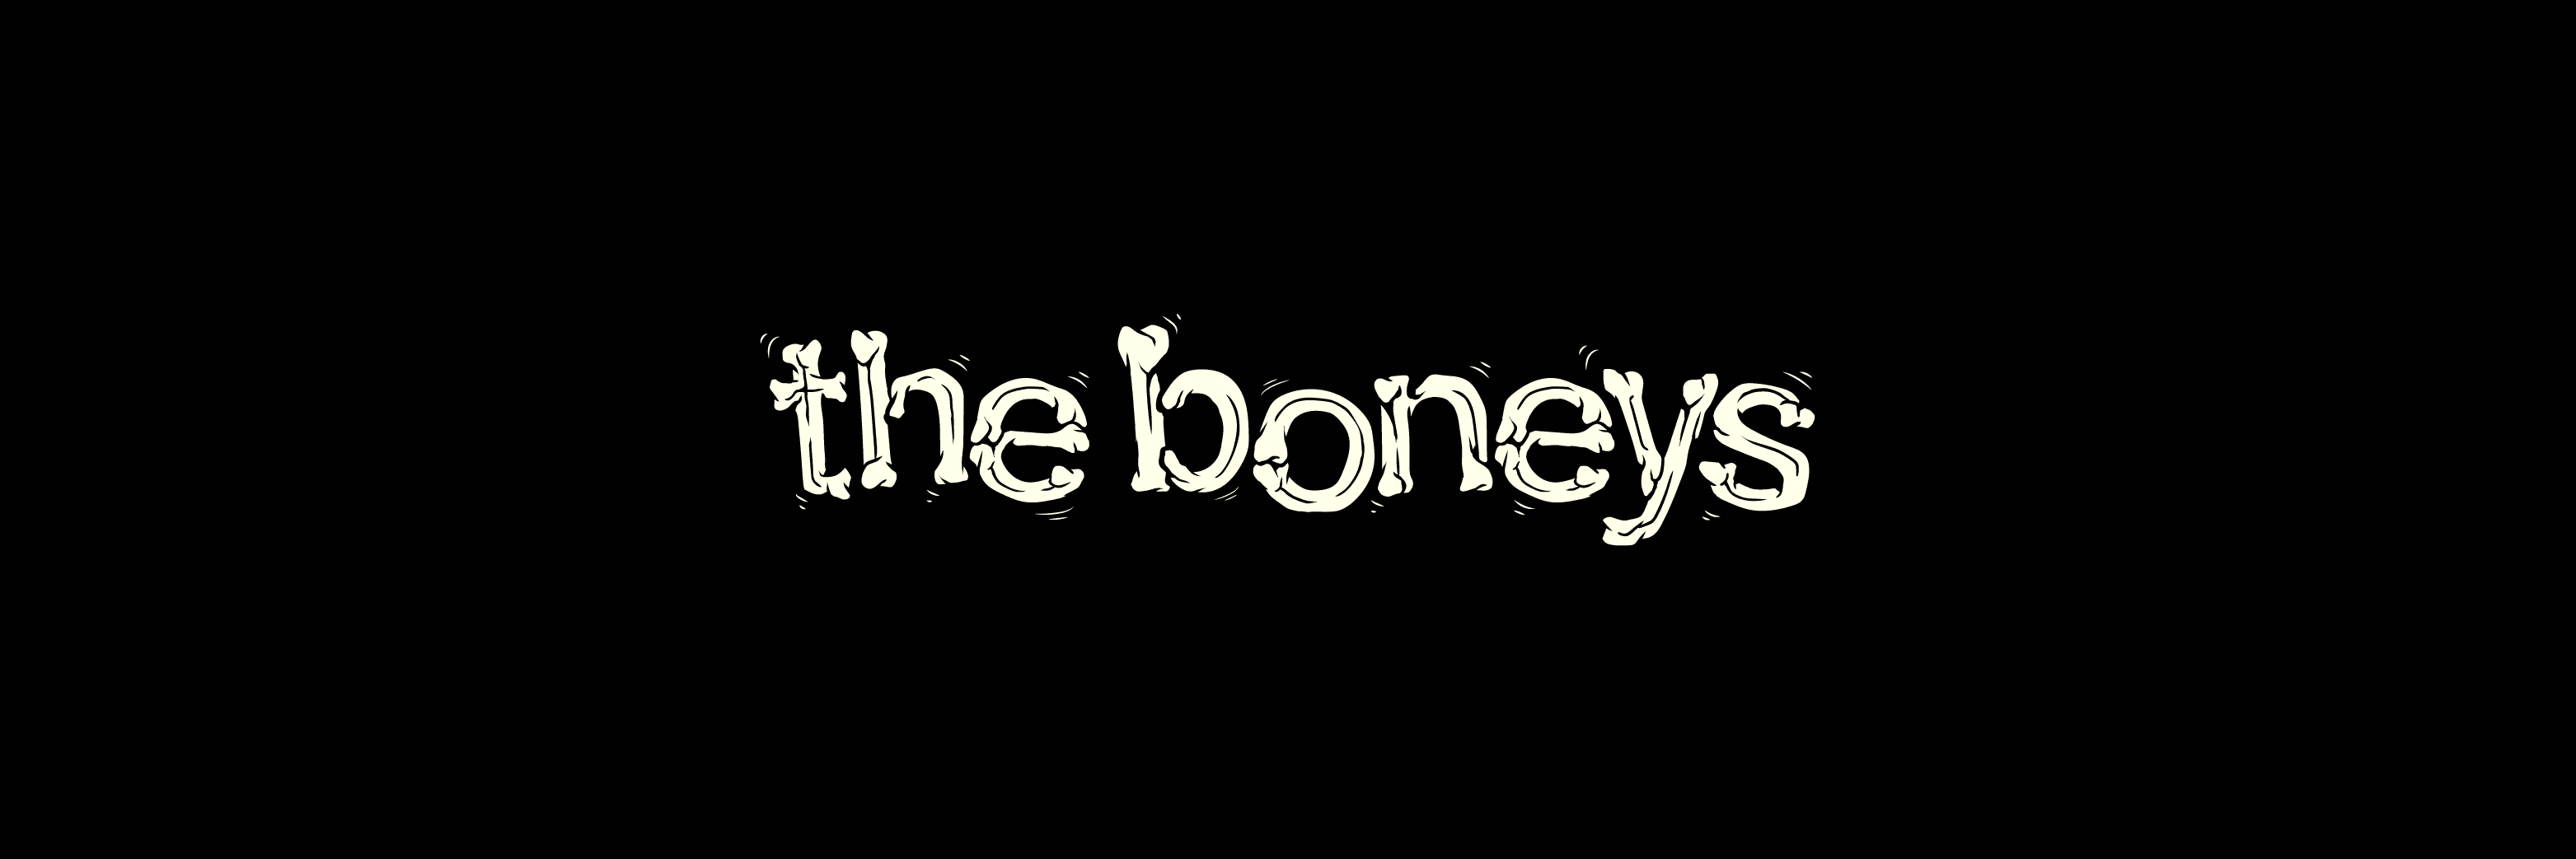 The Boneys